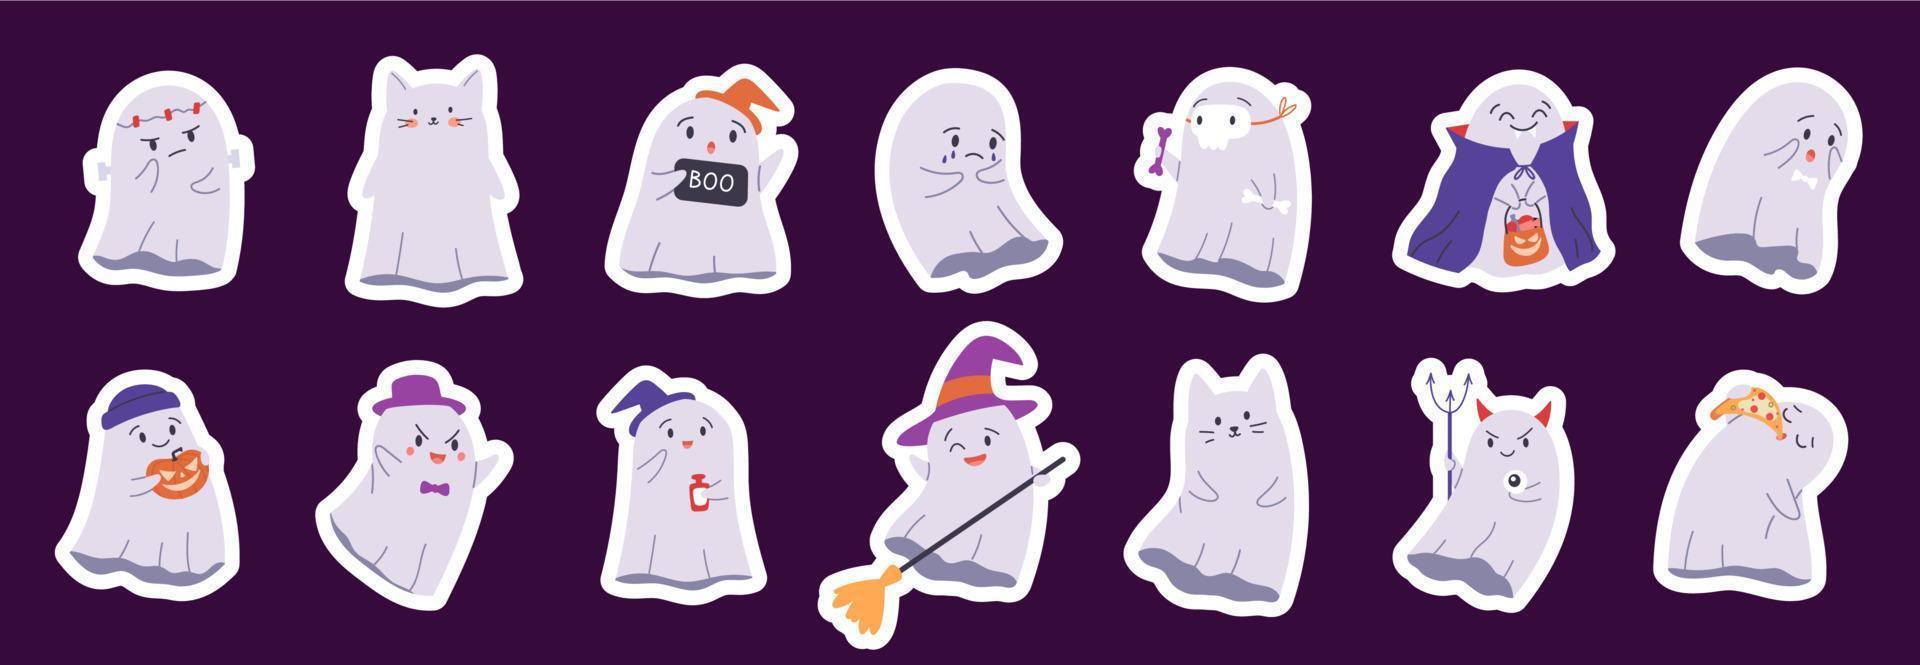 süße Halloween-Aufkleber mit gruseligem Phantom-Set. Fröhliche Geisterfiguren für Kinder. flache Vektoraufkleber vektor